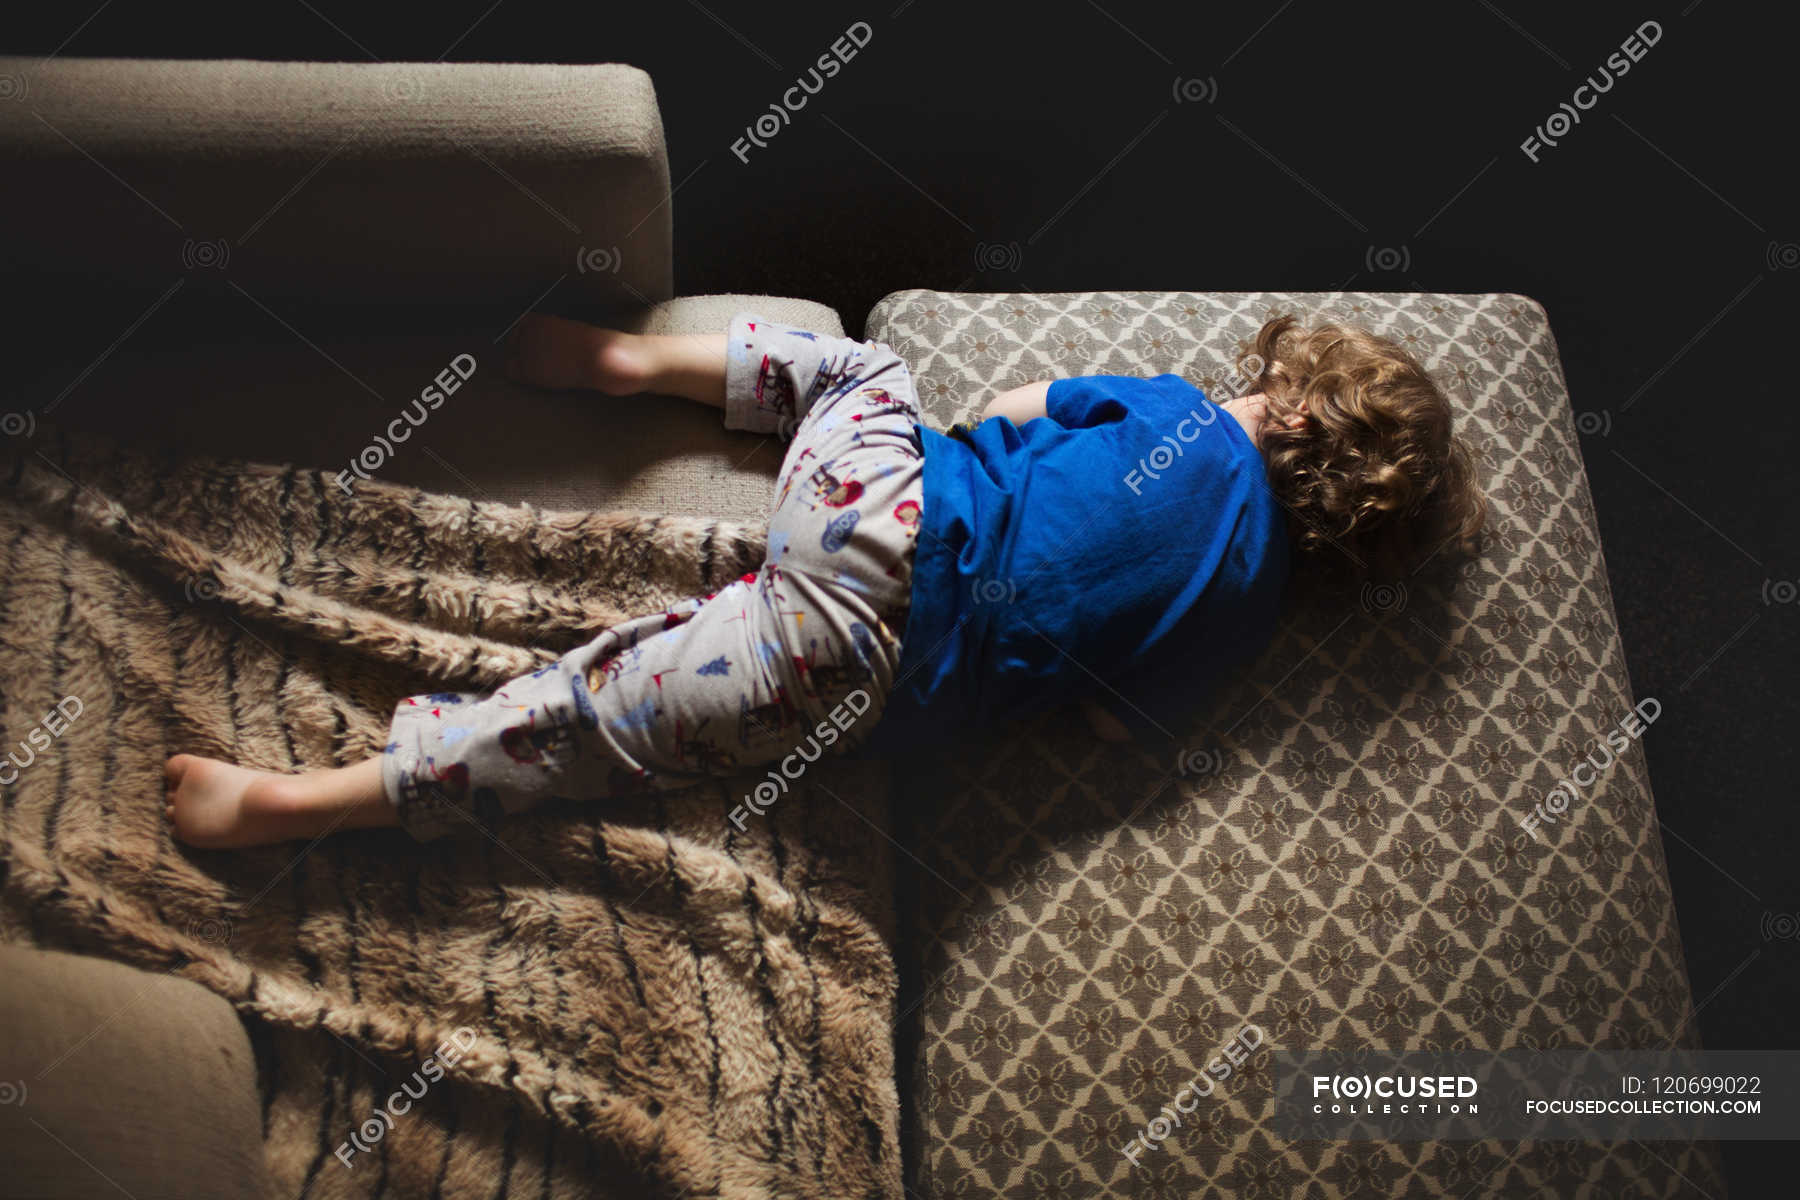 дети спят на диване